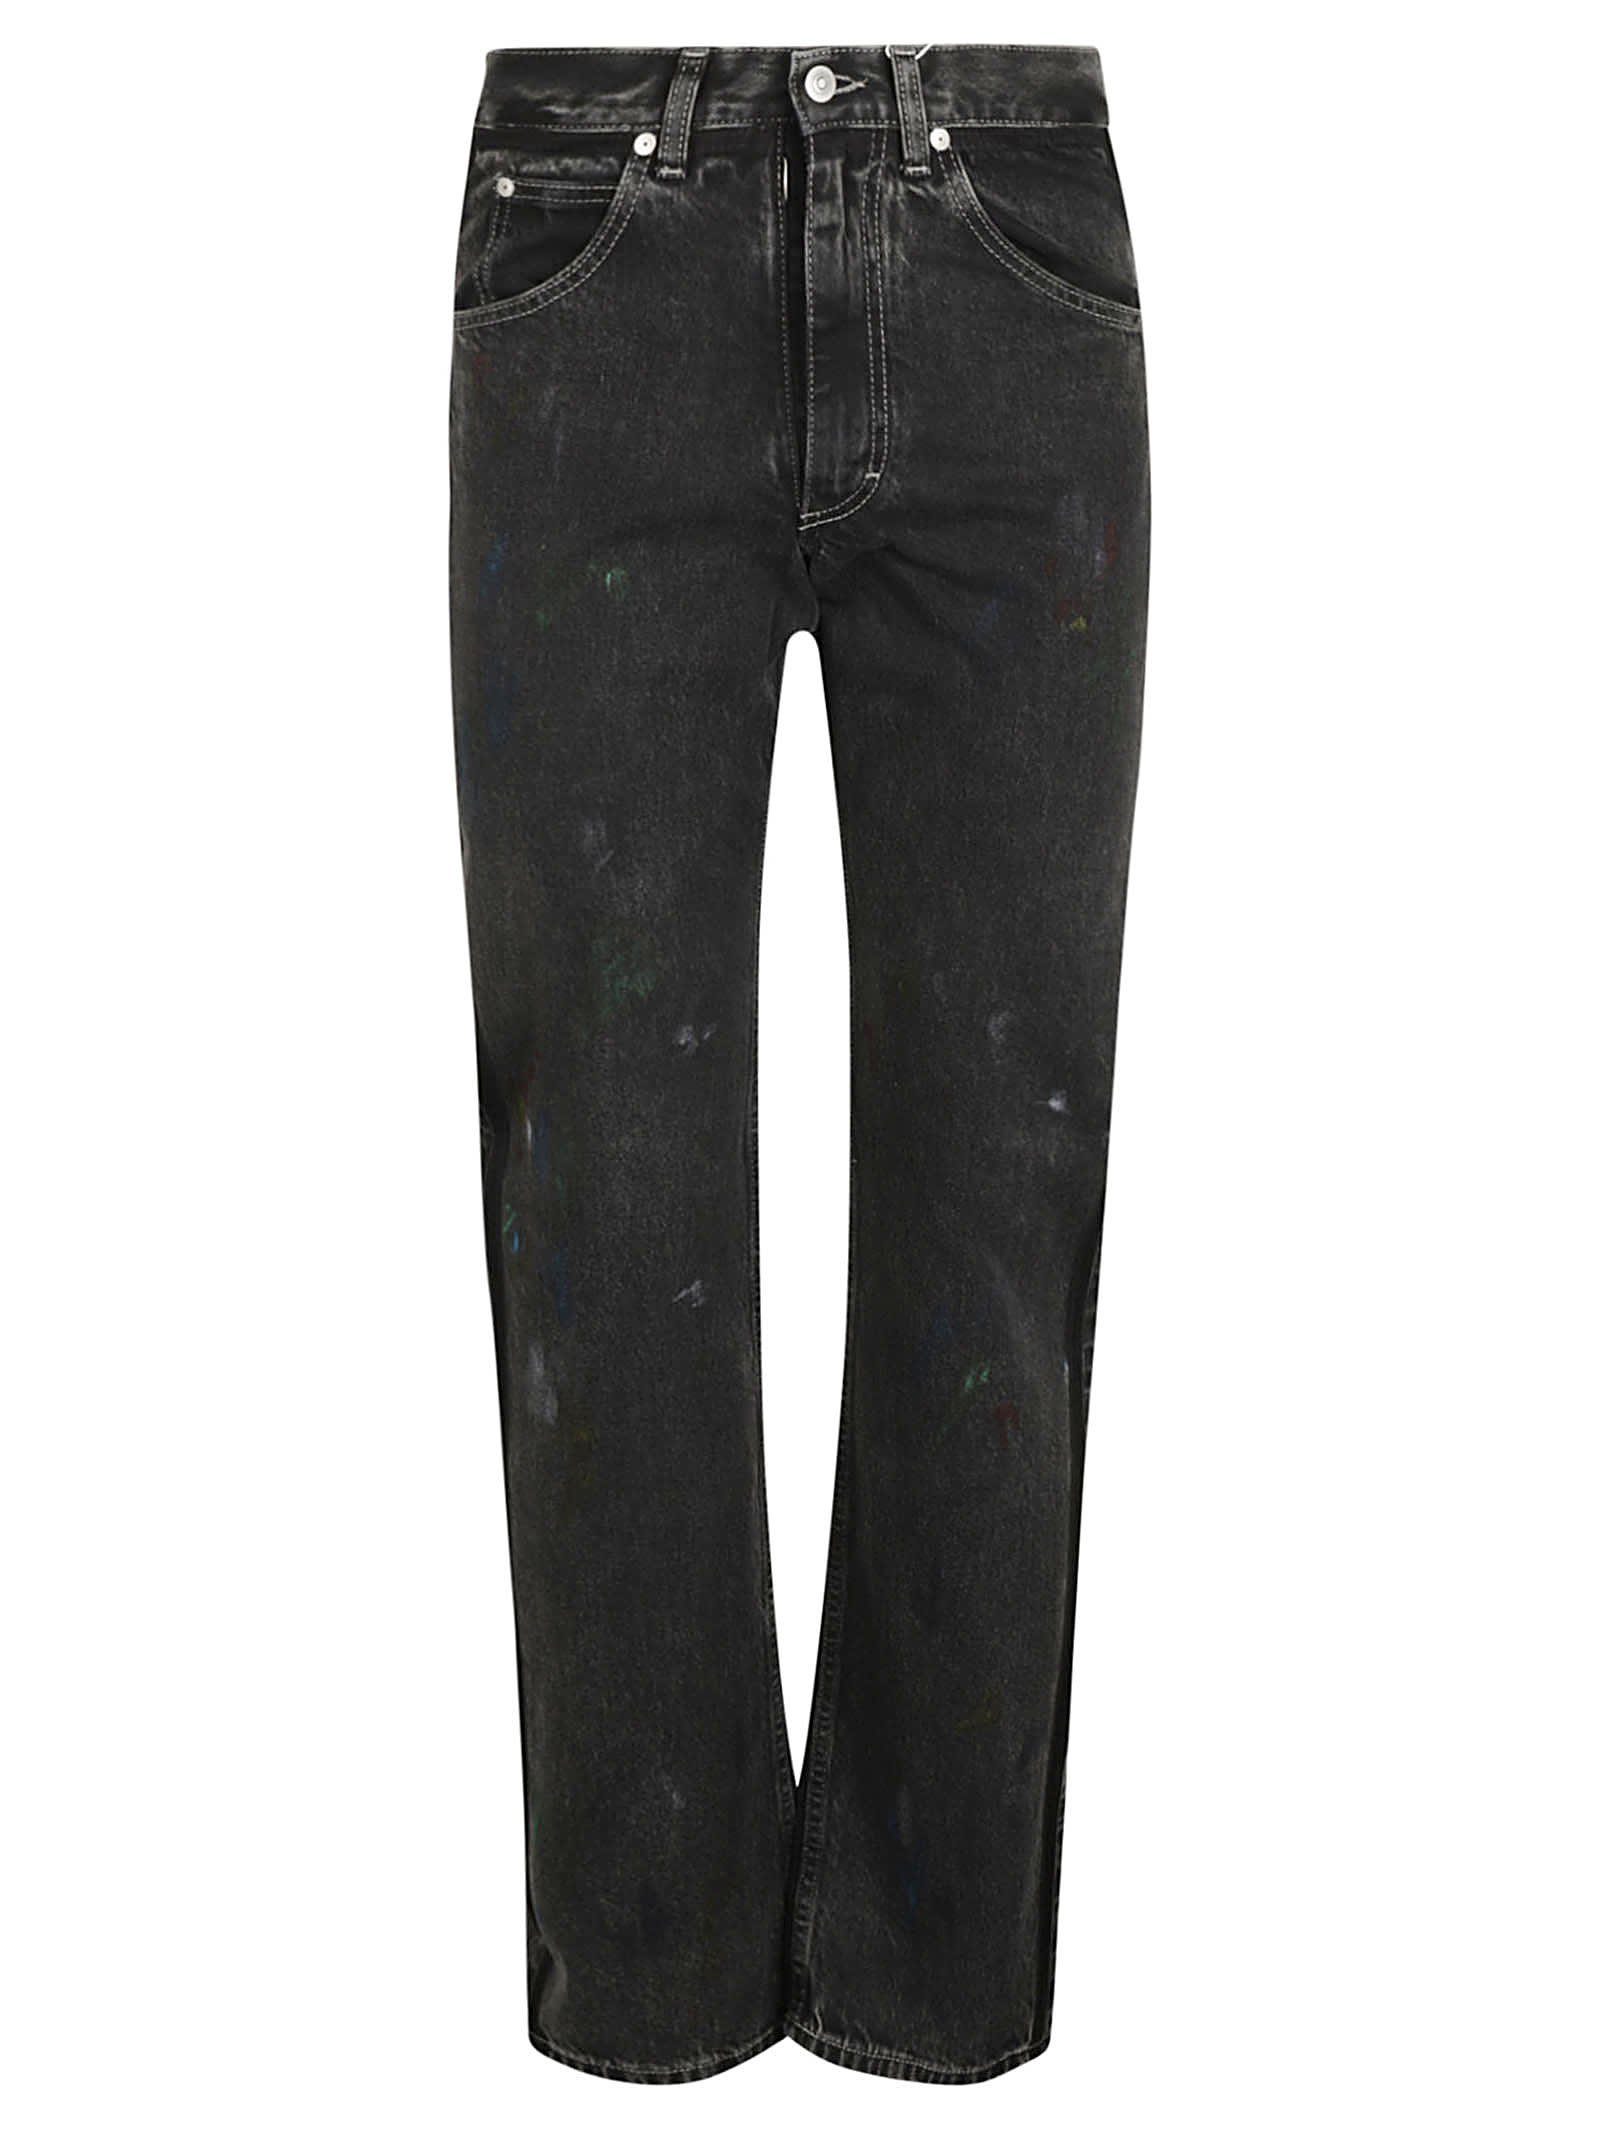 Maison Margiela Single Rear Pocket Jeans